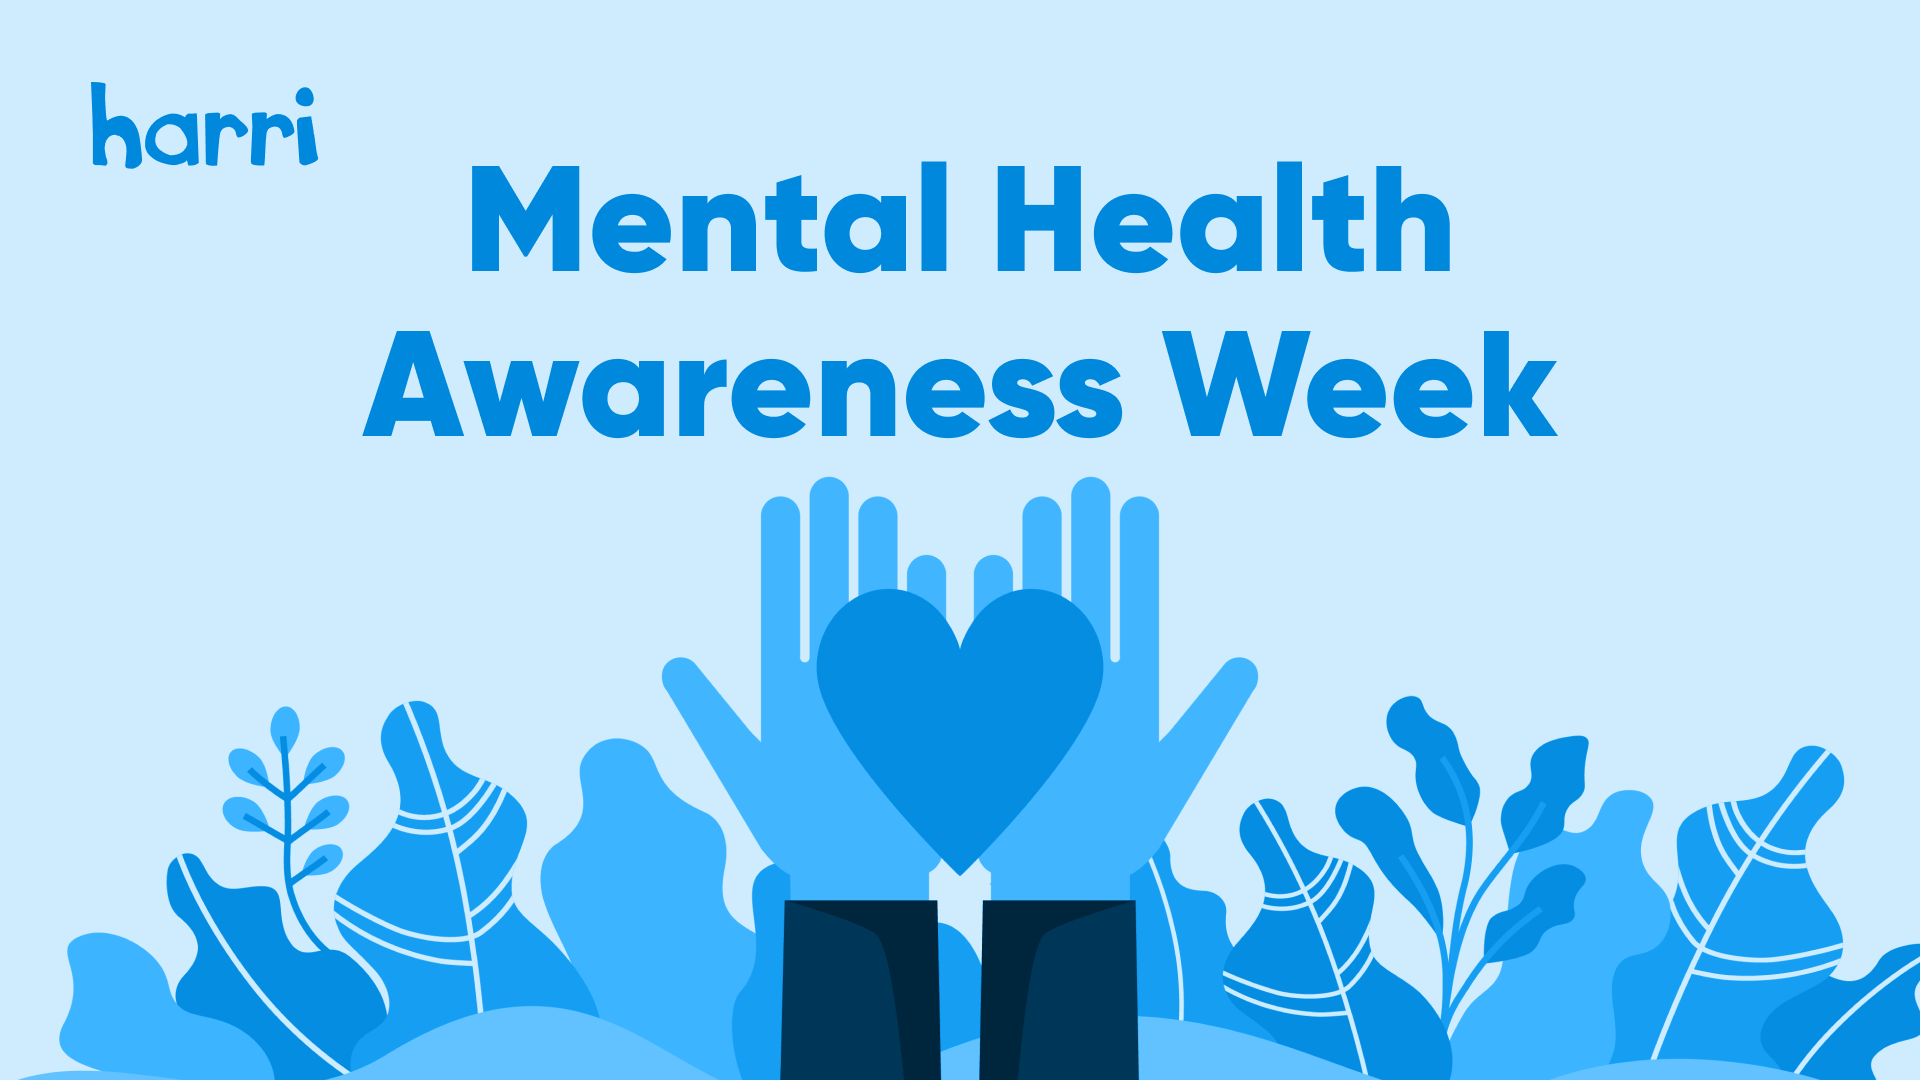 Harri supports Mental Health Awareness Week